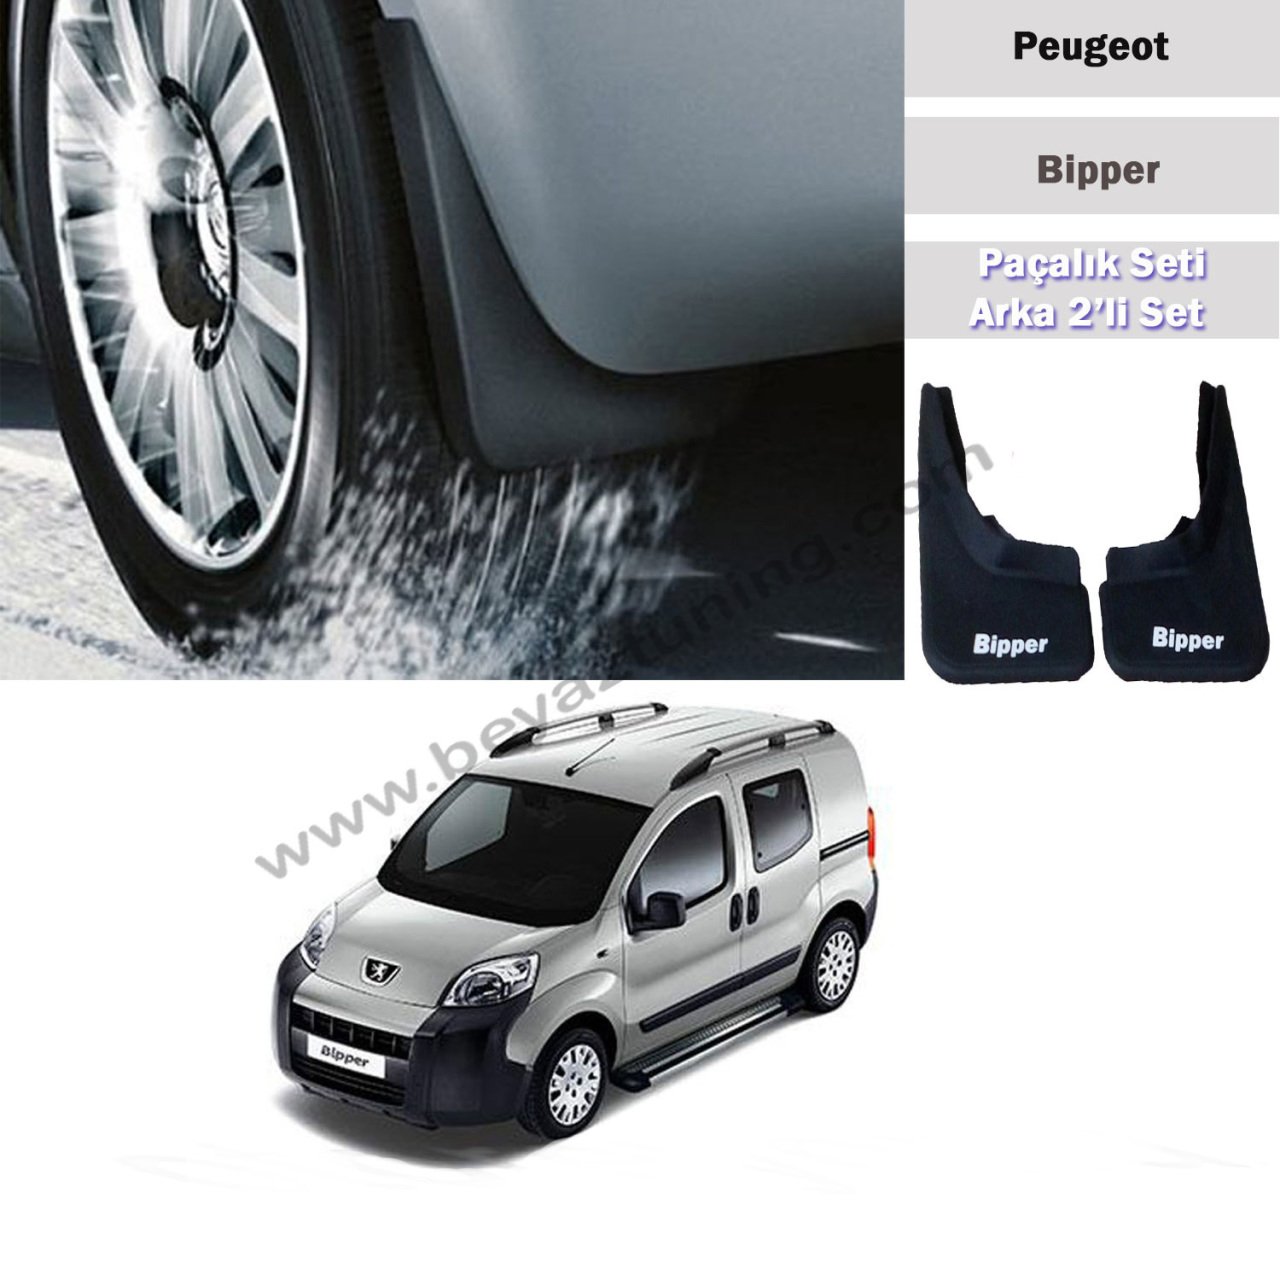 Peugeot Bipper Paçalık Tozluk Çamurluk Arka Set